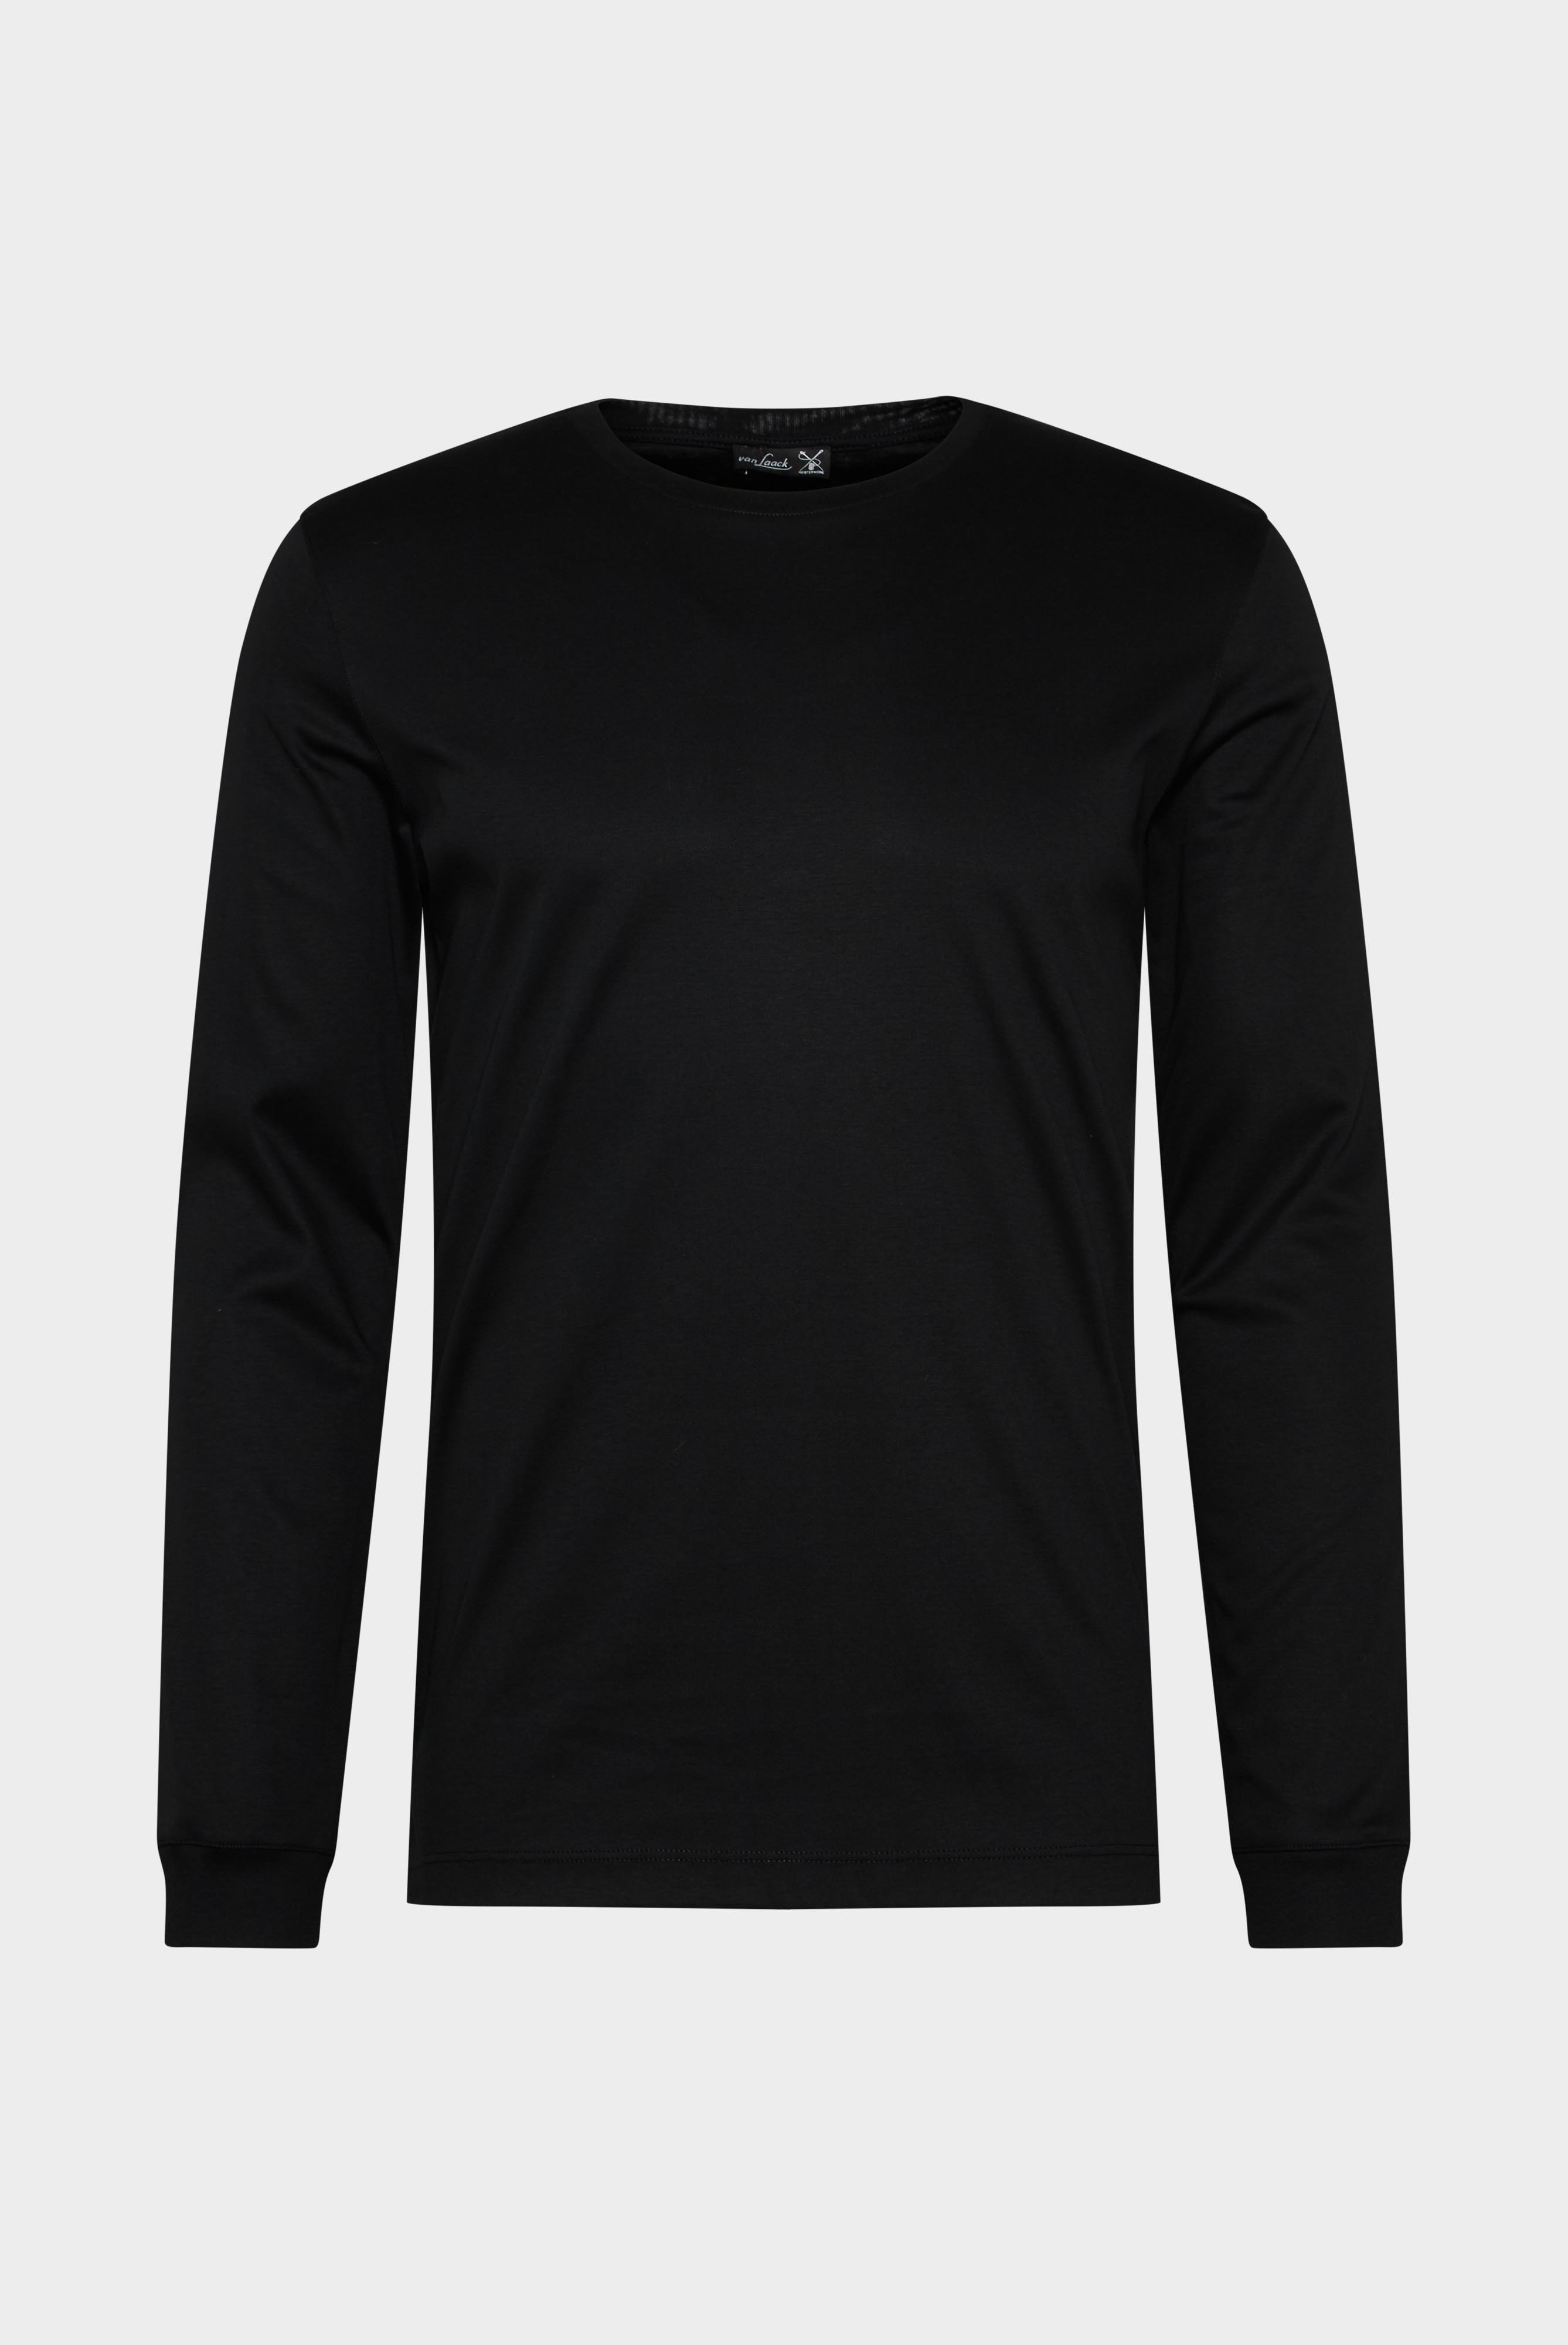 T-Shirts+Longsleeve Swiss Cotton Jersey Crew Neck T-Shirt+20.1718.UX.180031.099.M